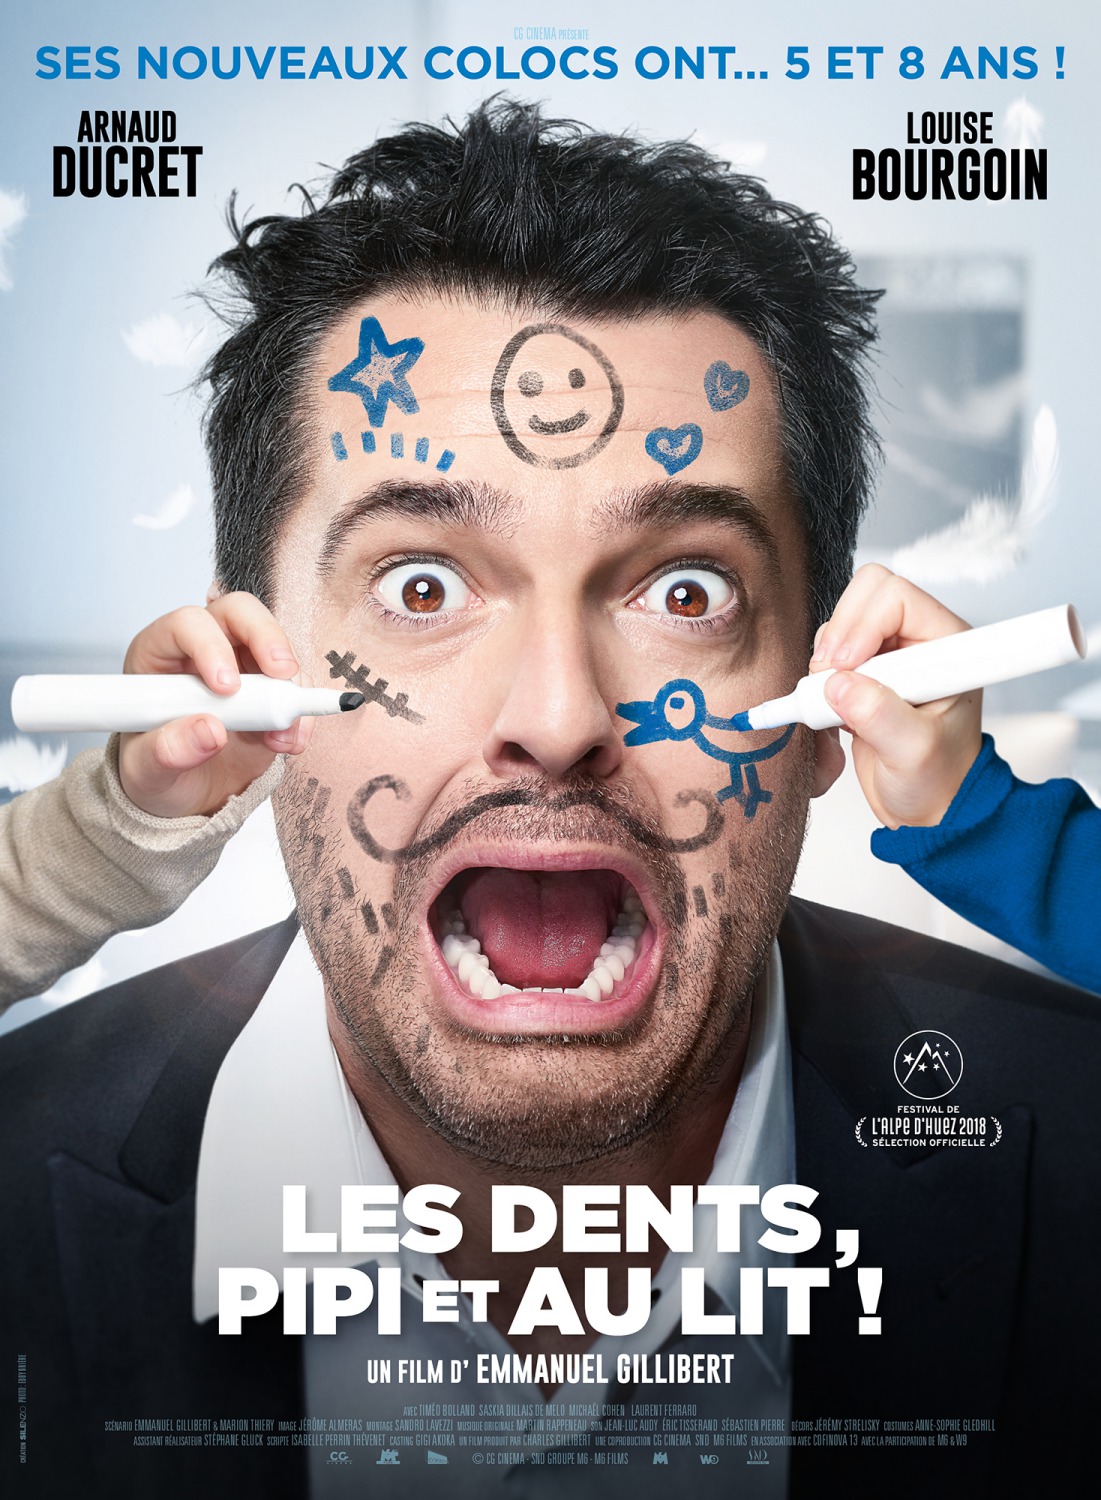 Extra Large Movie Poster Image for Les dents, pipi et au lit (#1 of 2)